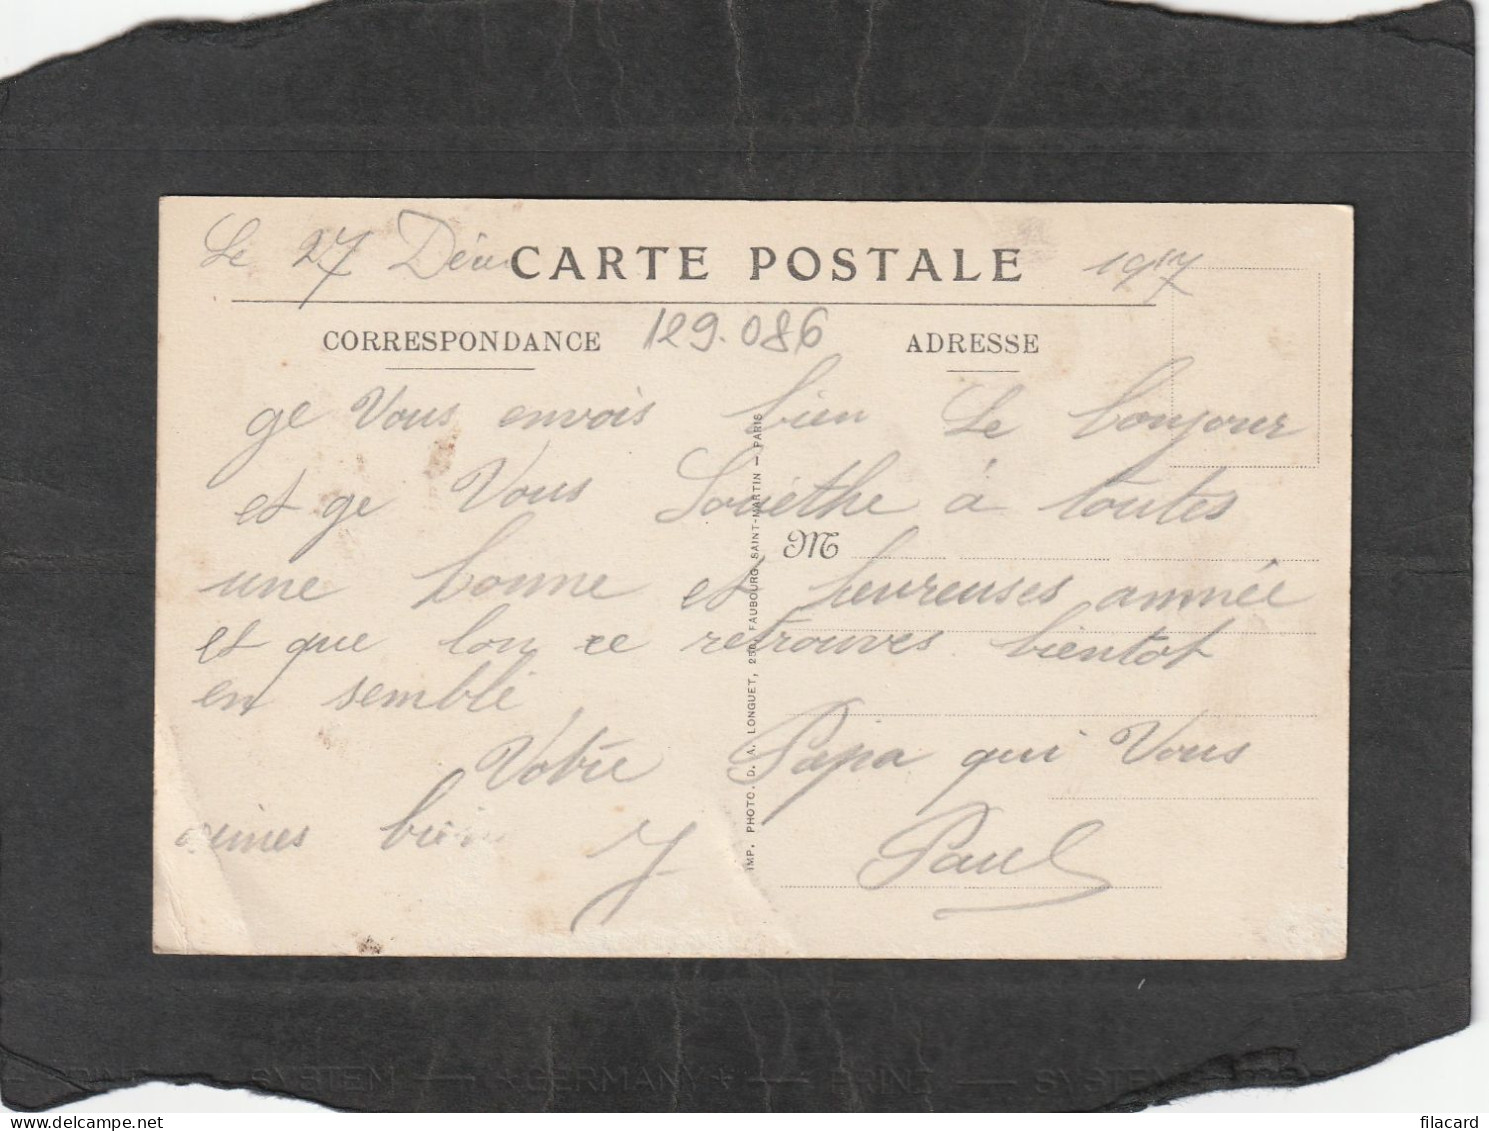 129086          Francia,   Grande  Guerre  1914-1917,    Vic-sur-Aisne,   Place  De La  Mairie,   NV(scritta) - War 1914-18